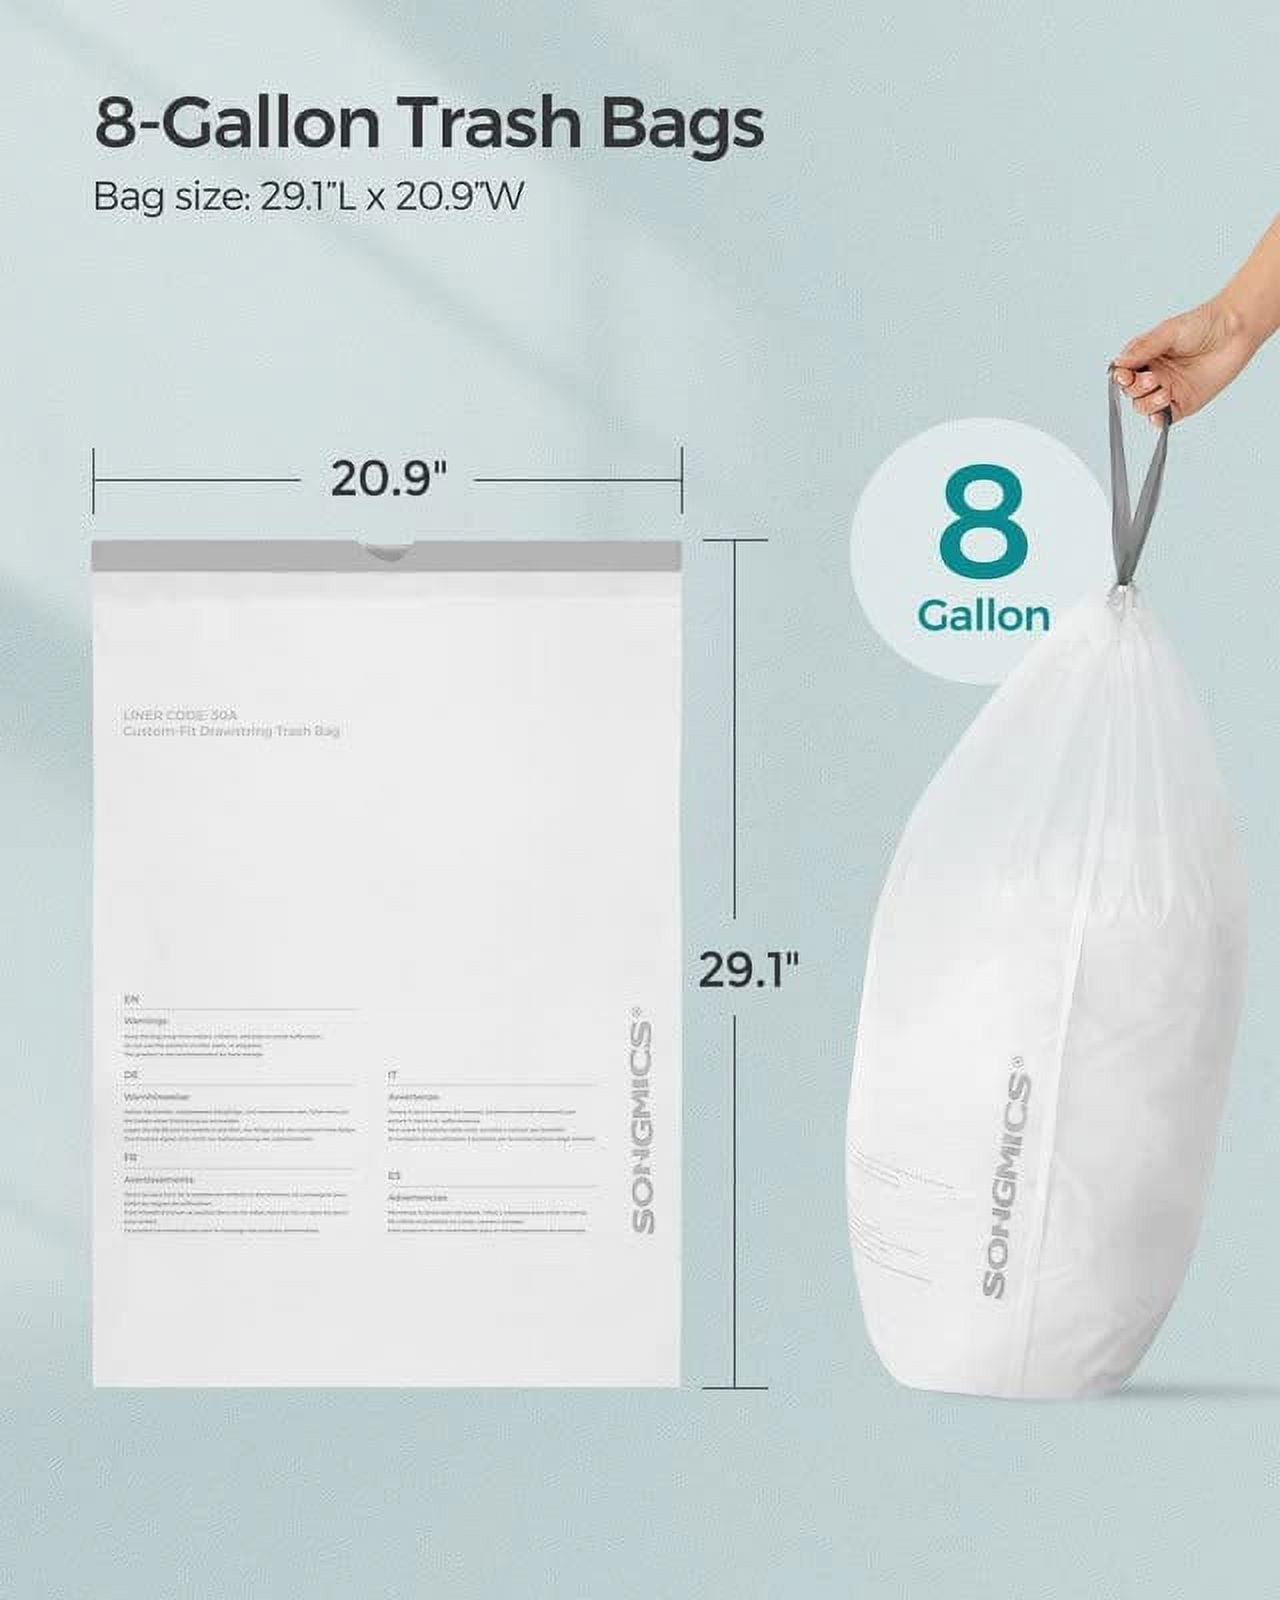 Simplehuman Code G Custom Fit Drawstring Trash Bags 30L / 8 GAL